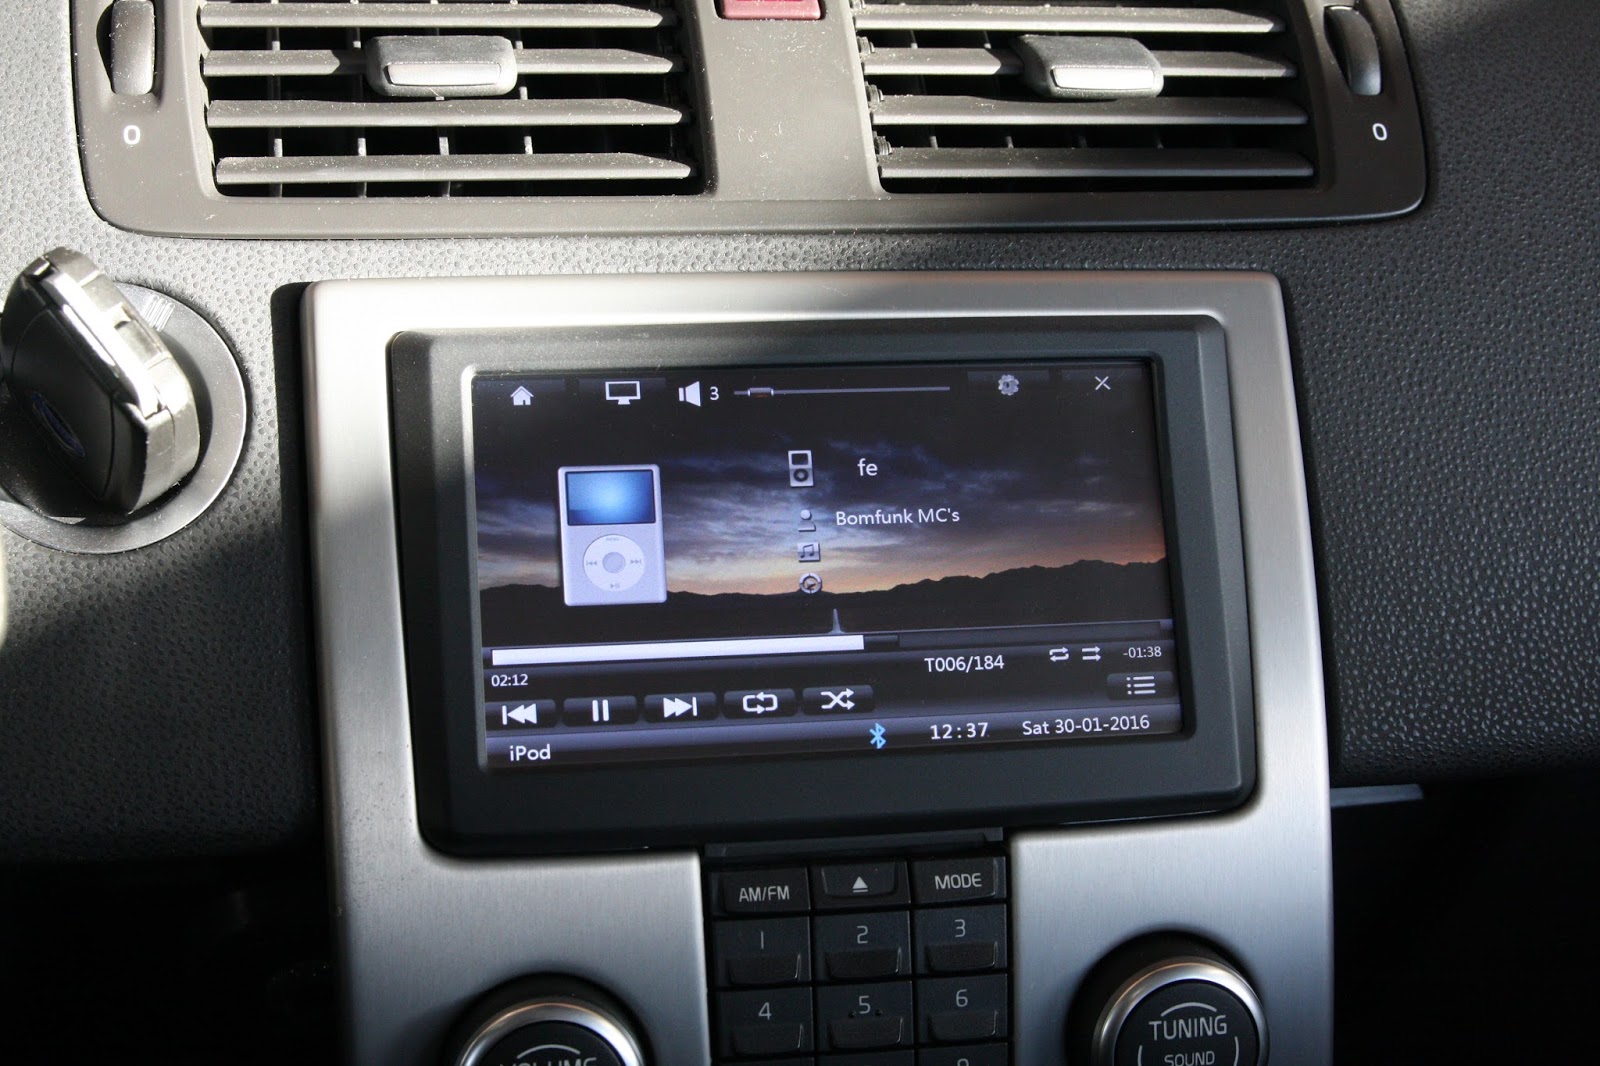 Volvo V50 audio, Bluepower headunit